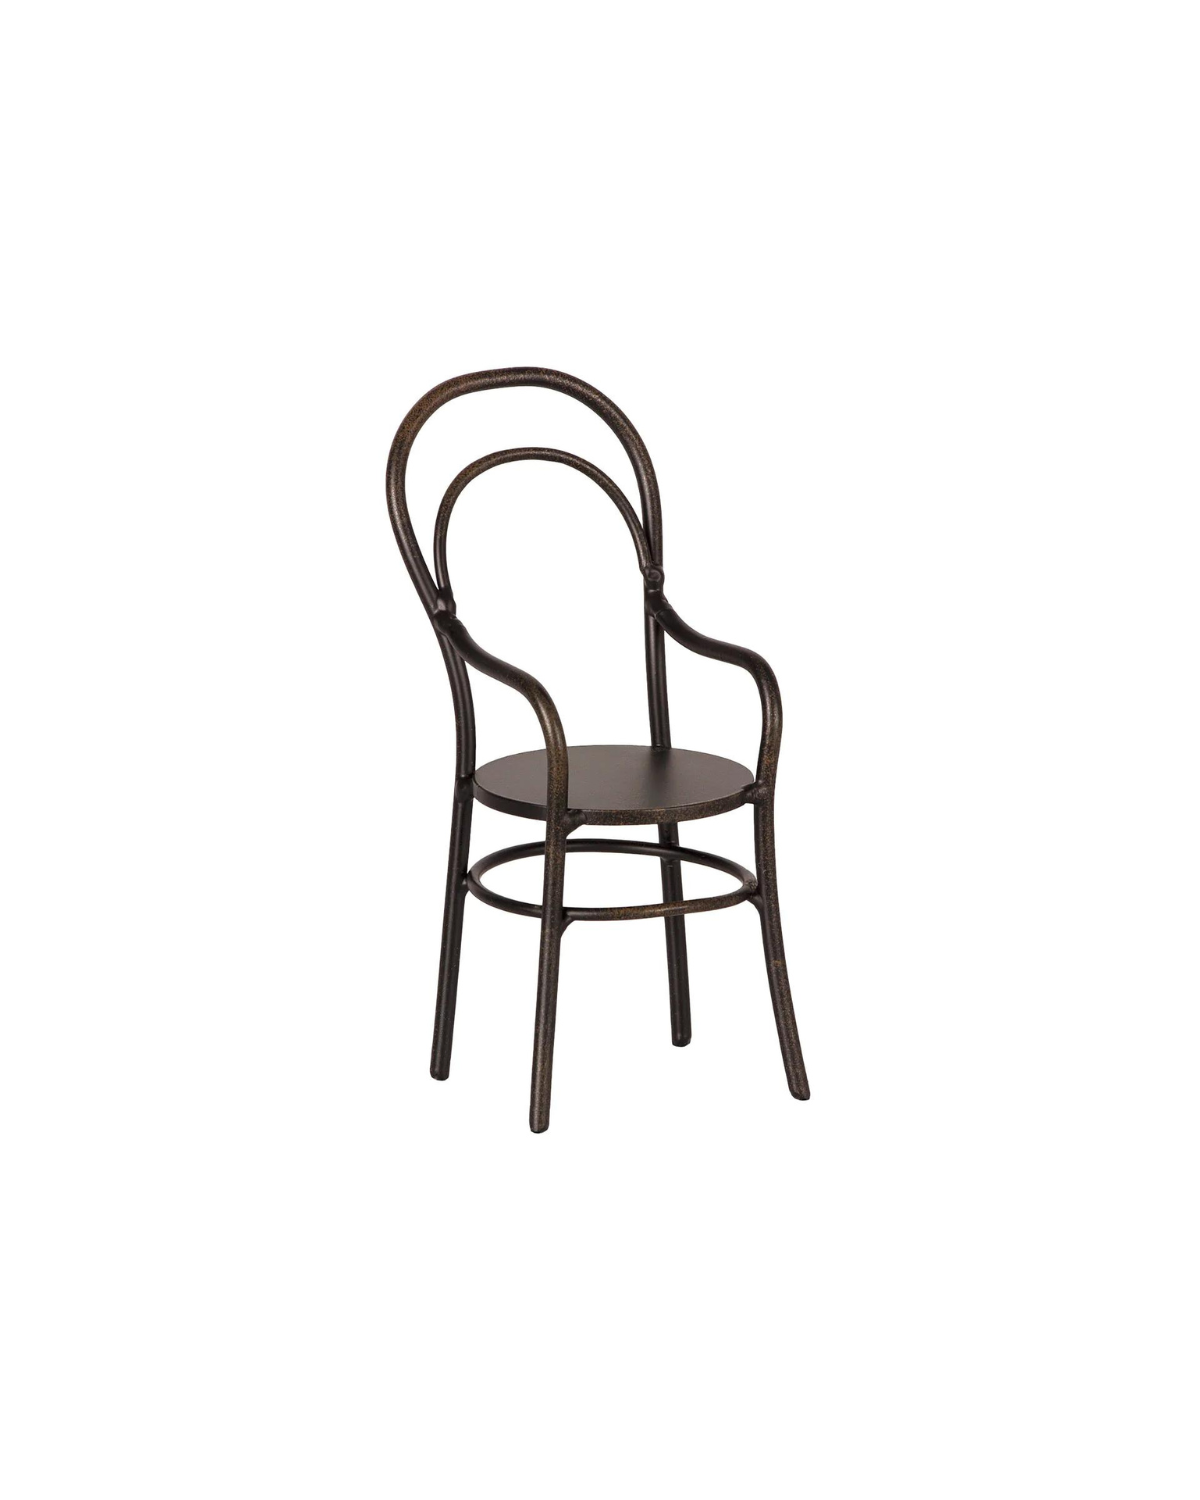 Black Maileg Armrest Chair - Charming Dollhouse Furniture